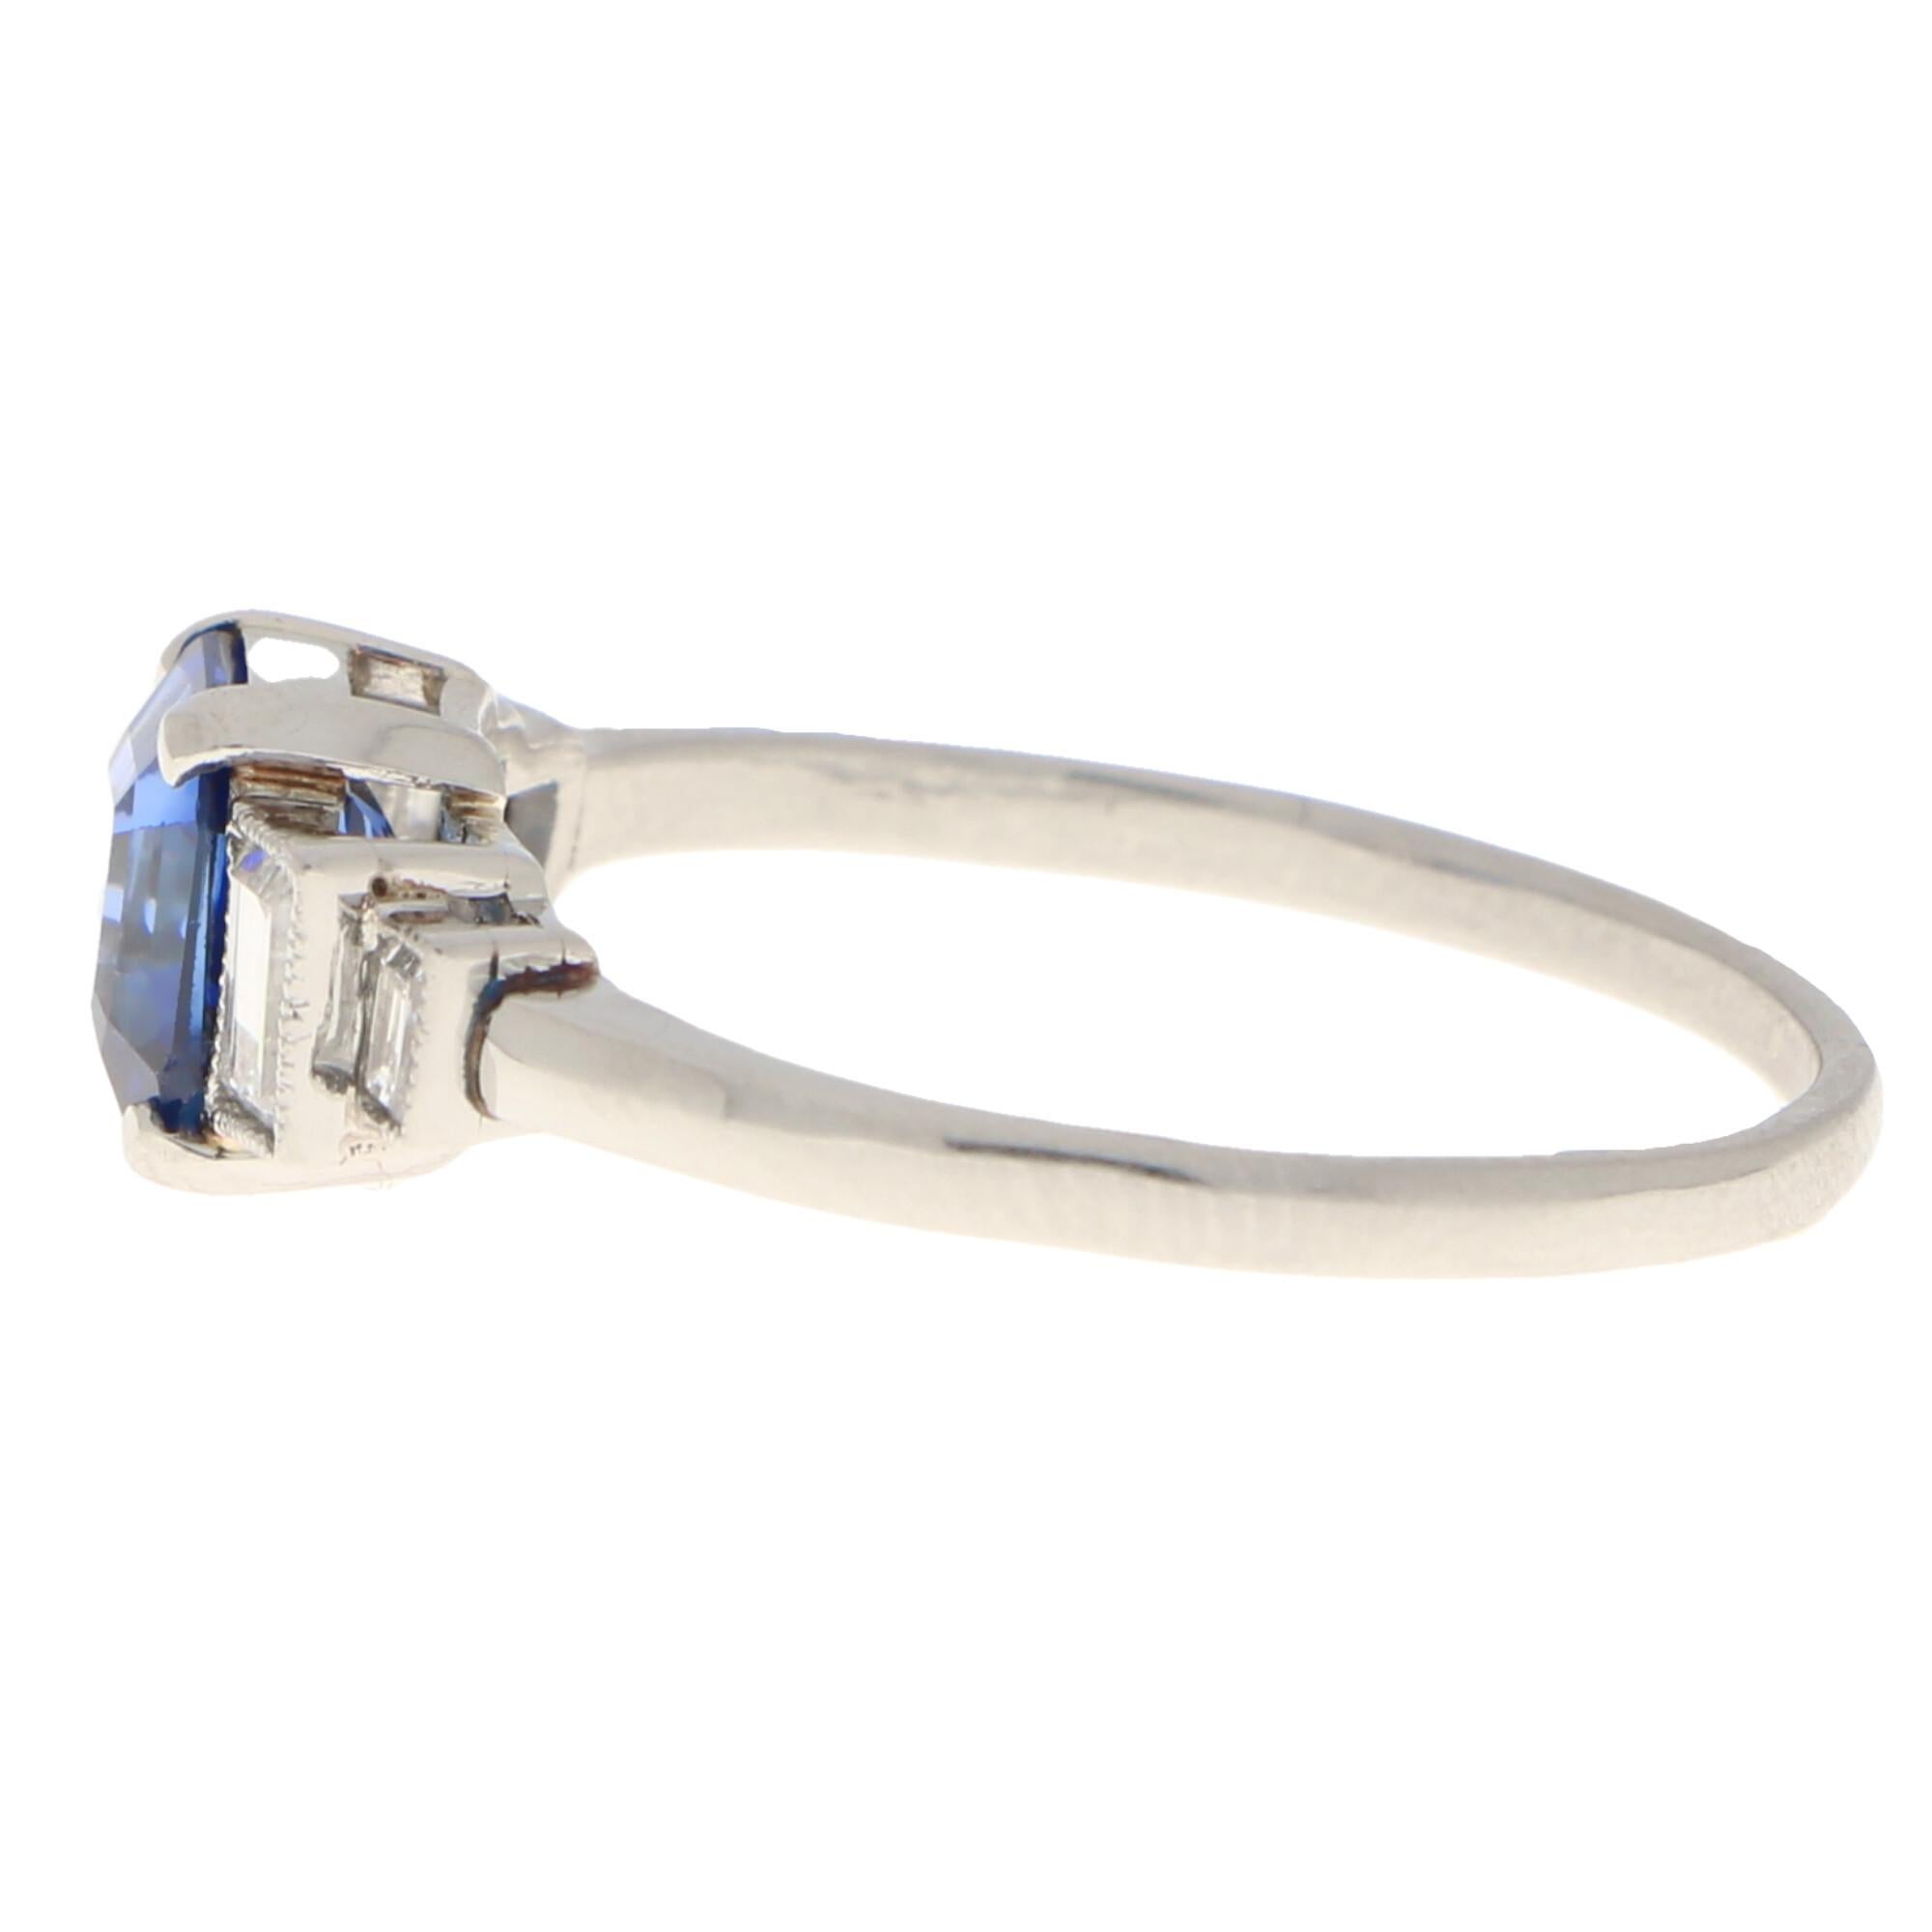 Women's or Men's Art Deco Inspired Sapphire and Diamond Engagement Ring Set in Platinum